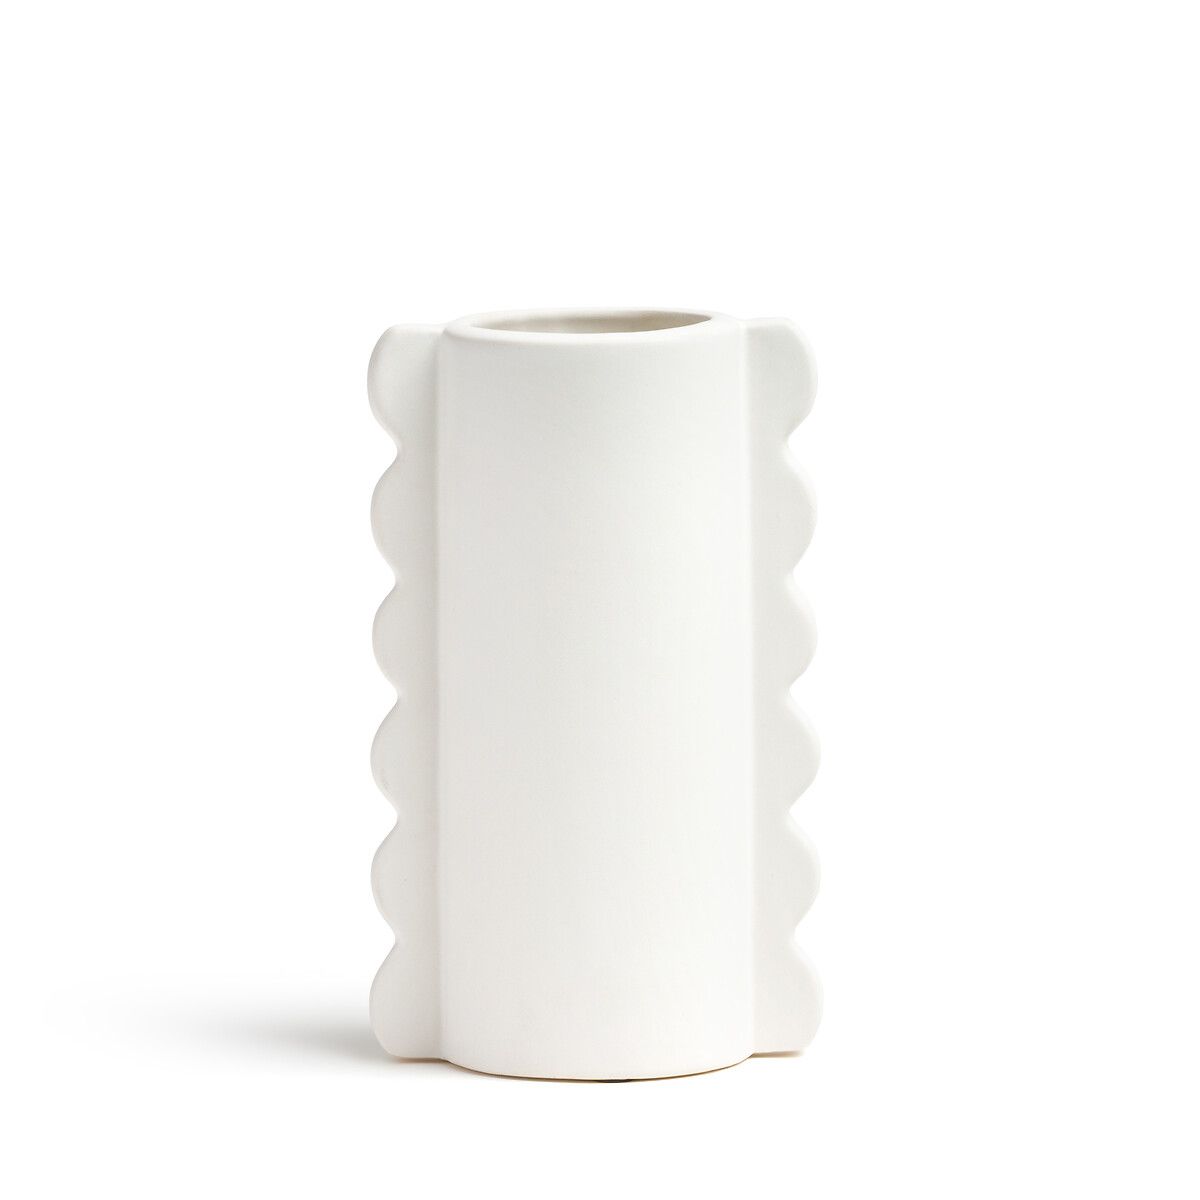 Caldero 24.5cm High Earthenware Vase | La Redoute (UK)